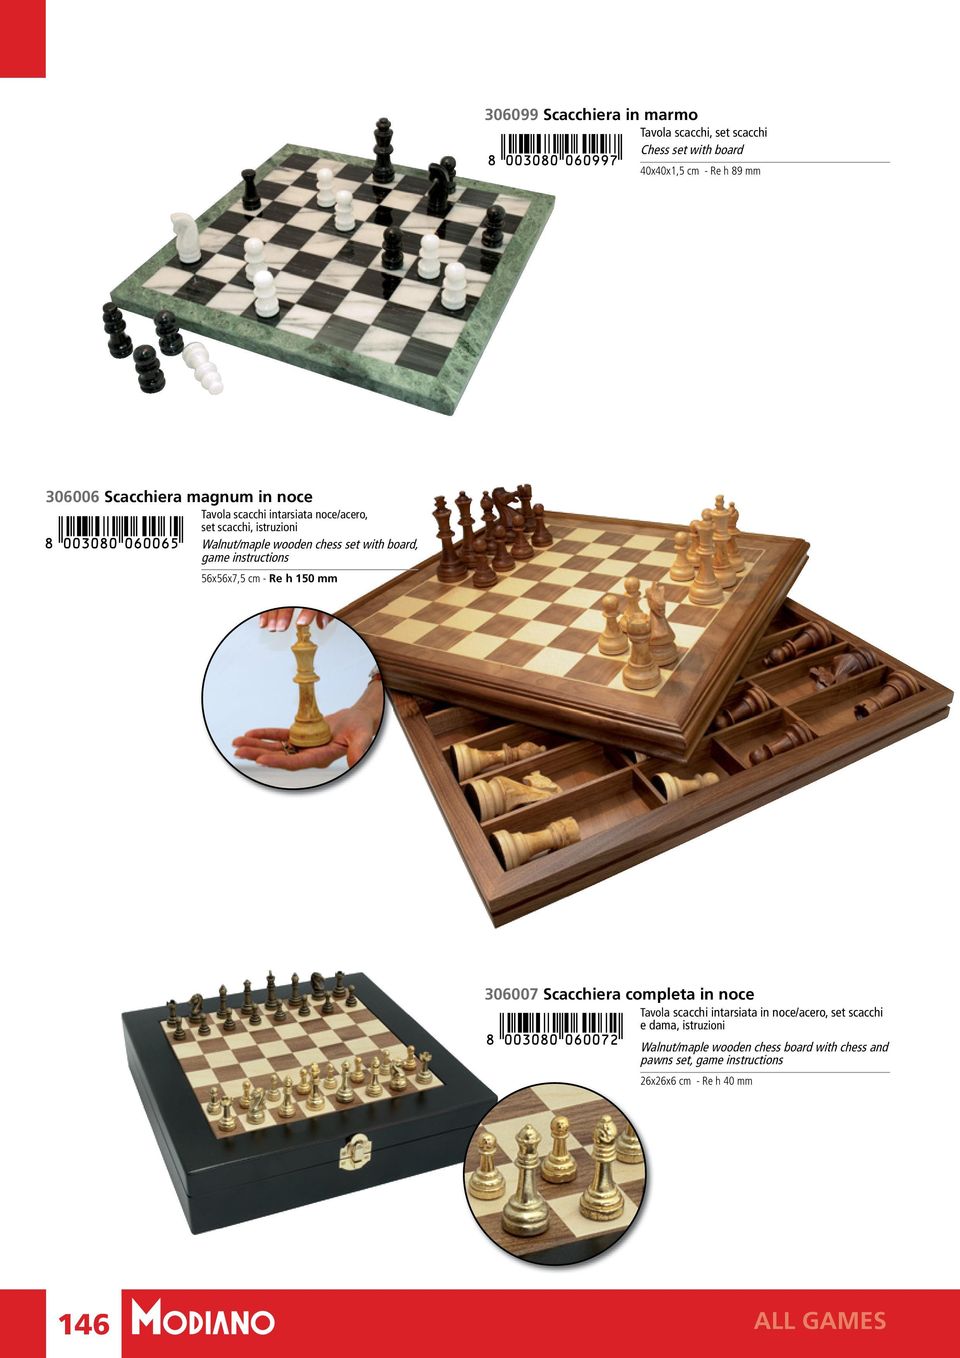 instructions 56x56x7,5 cm - Re h 150 mm 306007 Scacchiera completa in noce Tavola scacchi intarsiata in noce/acero, set